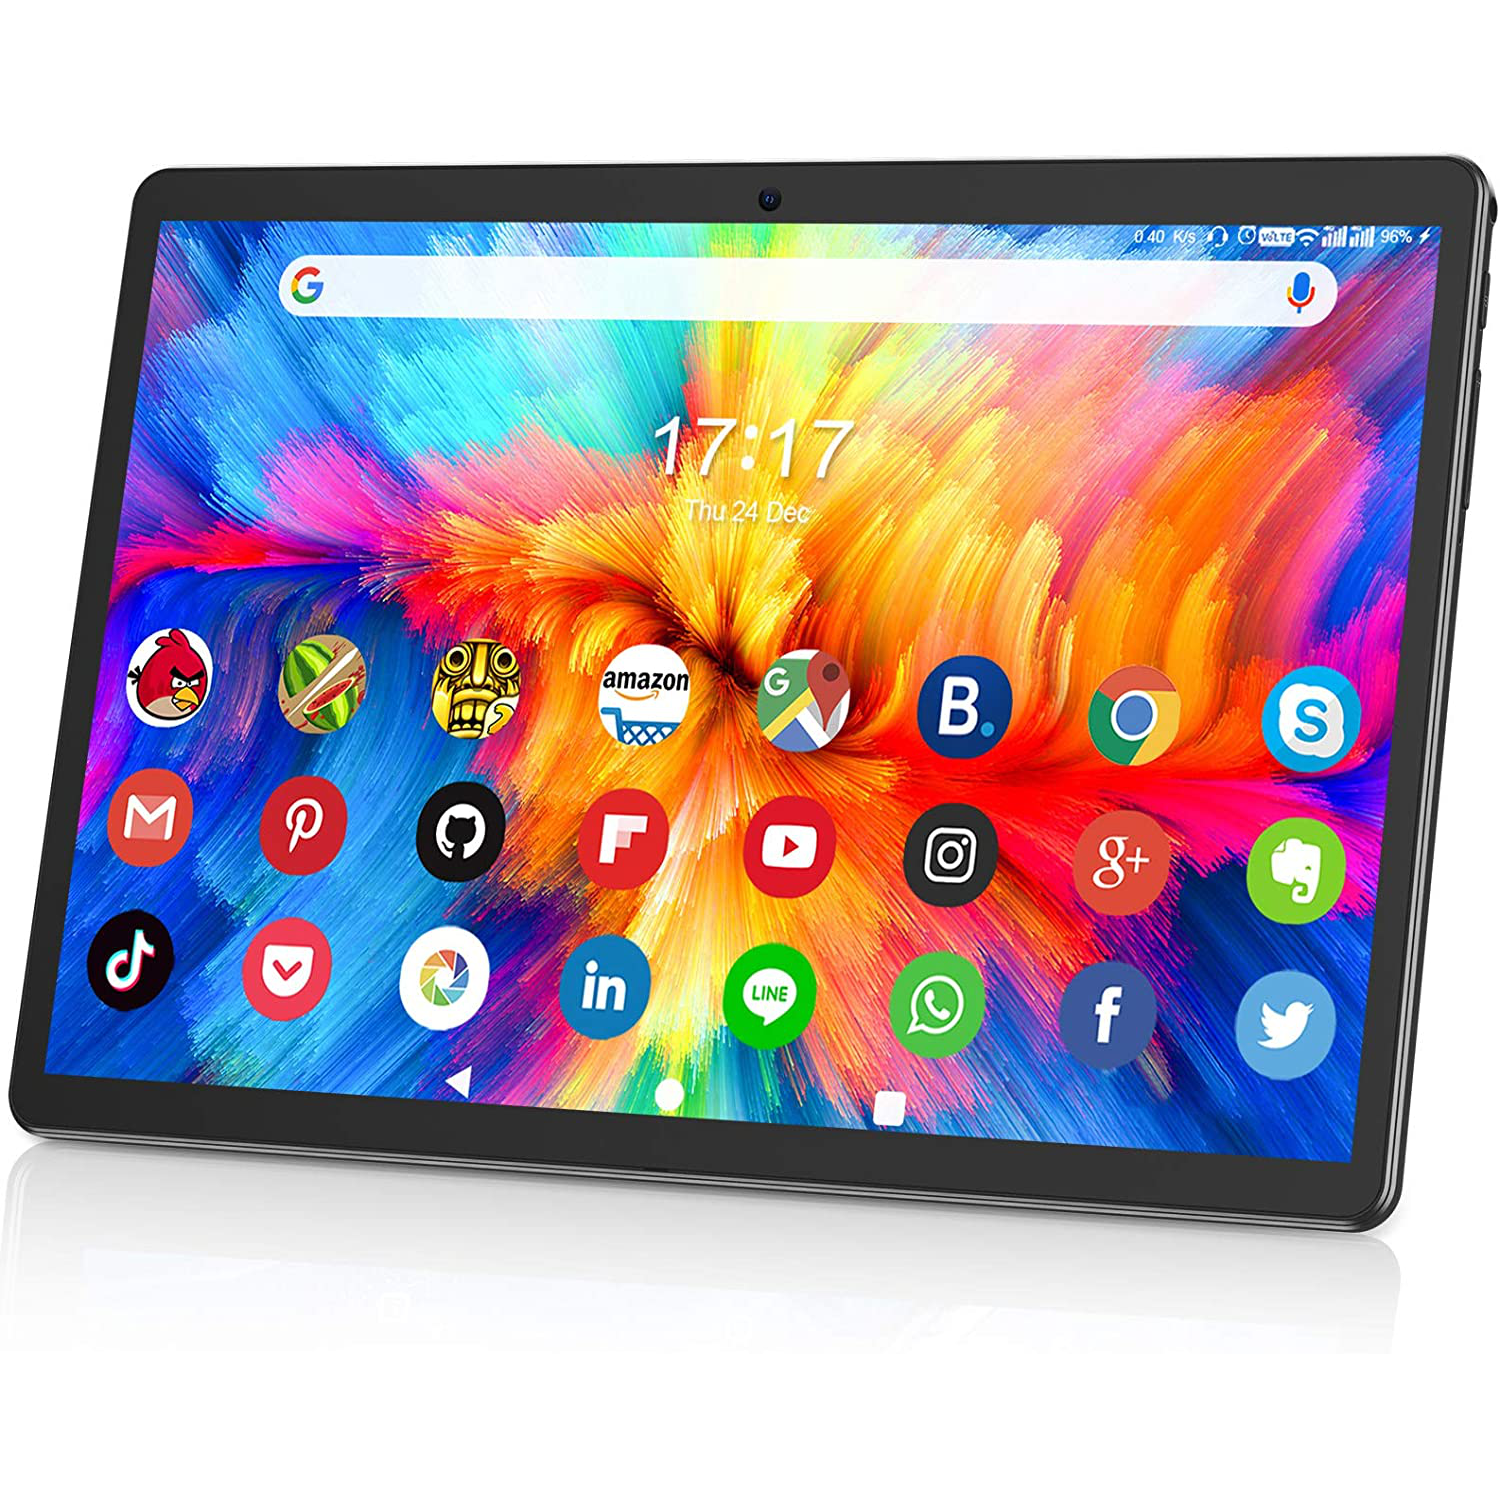 Tablet 10 Inch | Dual SIM Android 9.0 Quad Core Processor Tablets, 32GB RAM